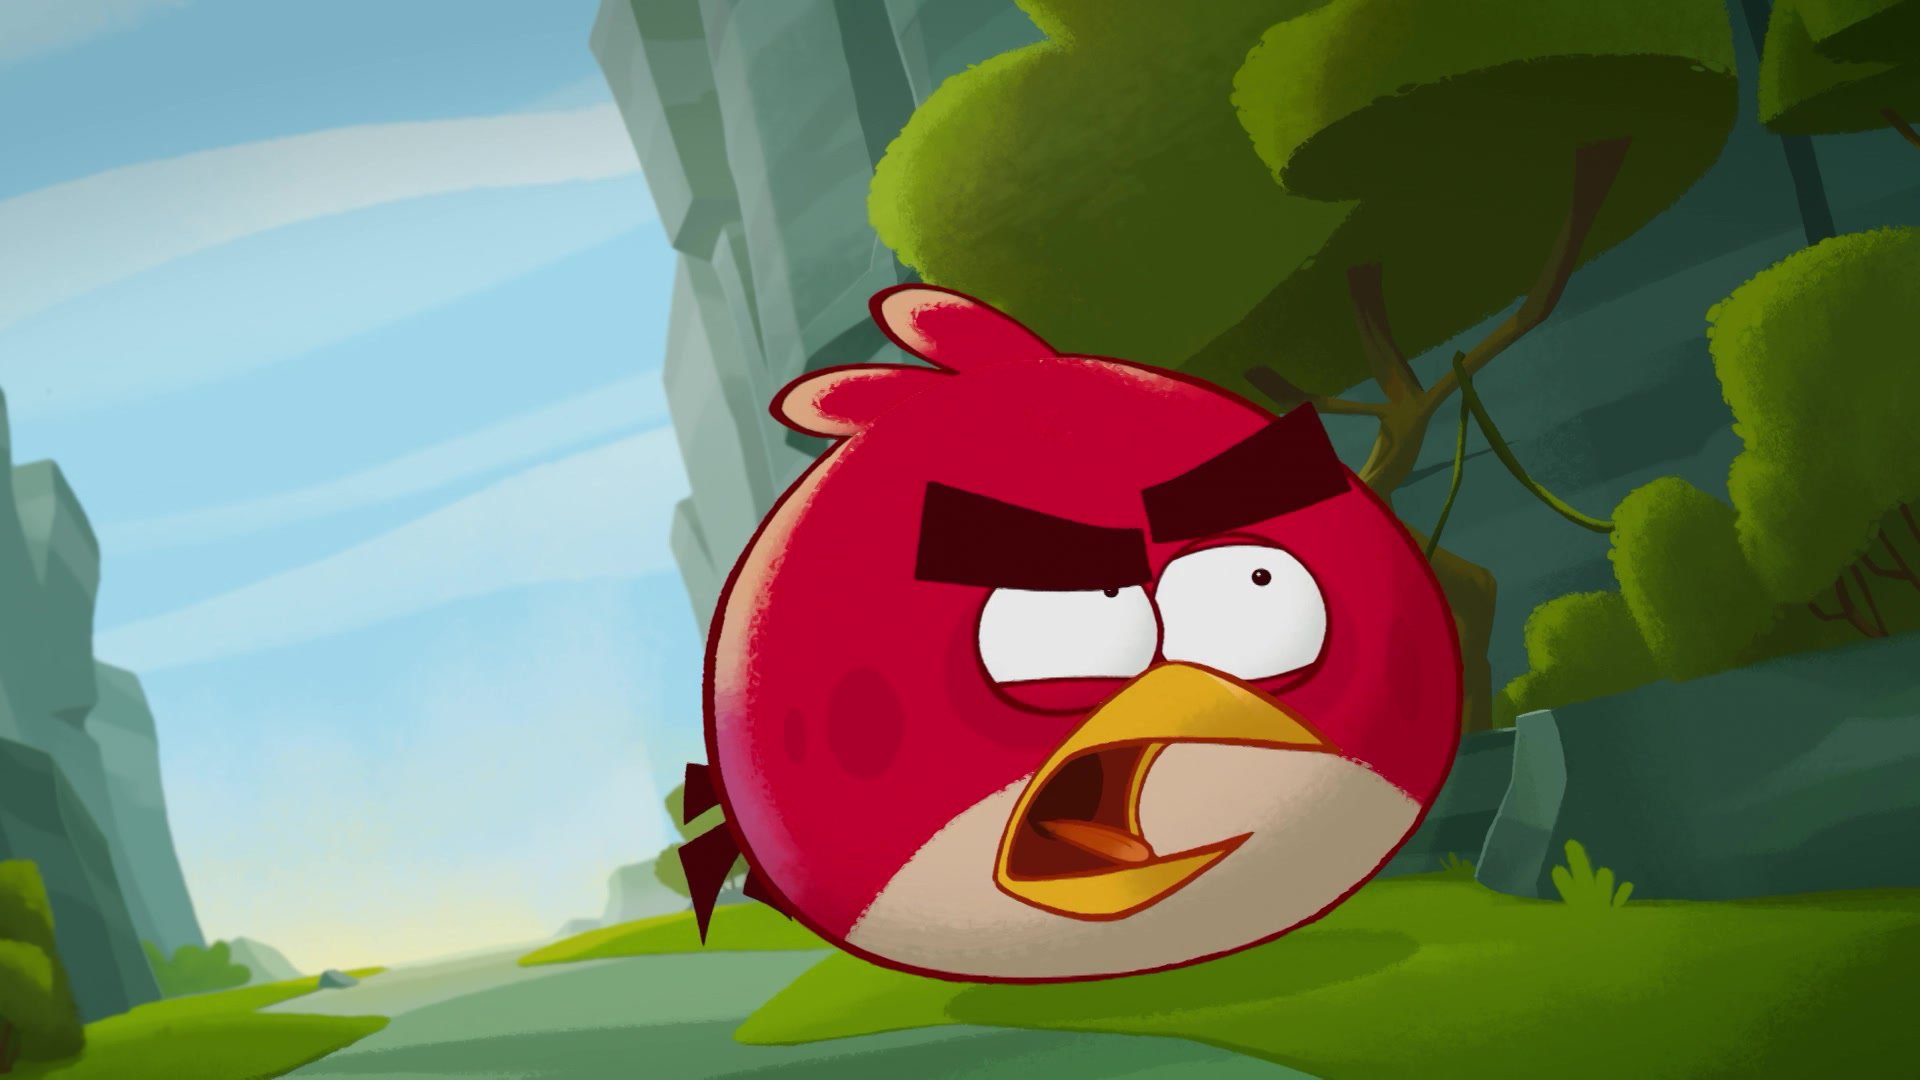 Angry birds 1.5 2. Птички Энгри бердз. Чак Энгри бердз. Игра Angry Birds Red. Angry Birds toons Чак.